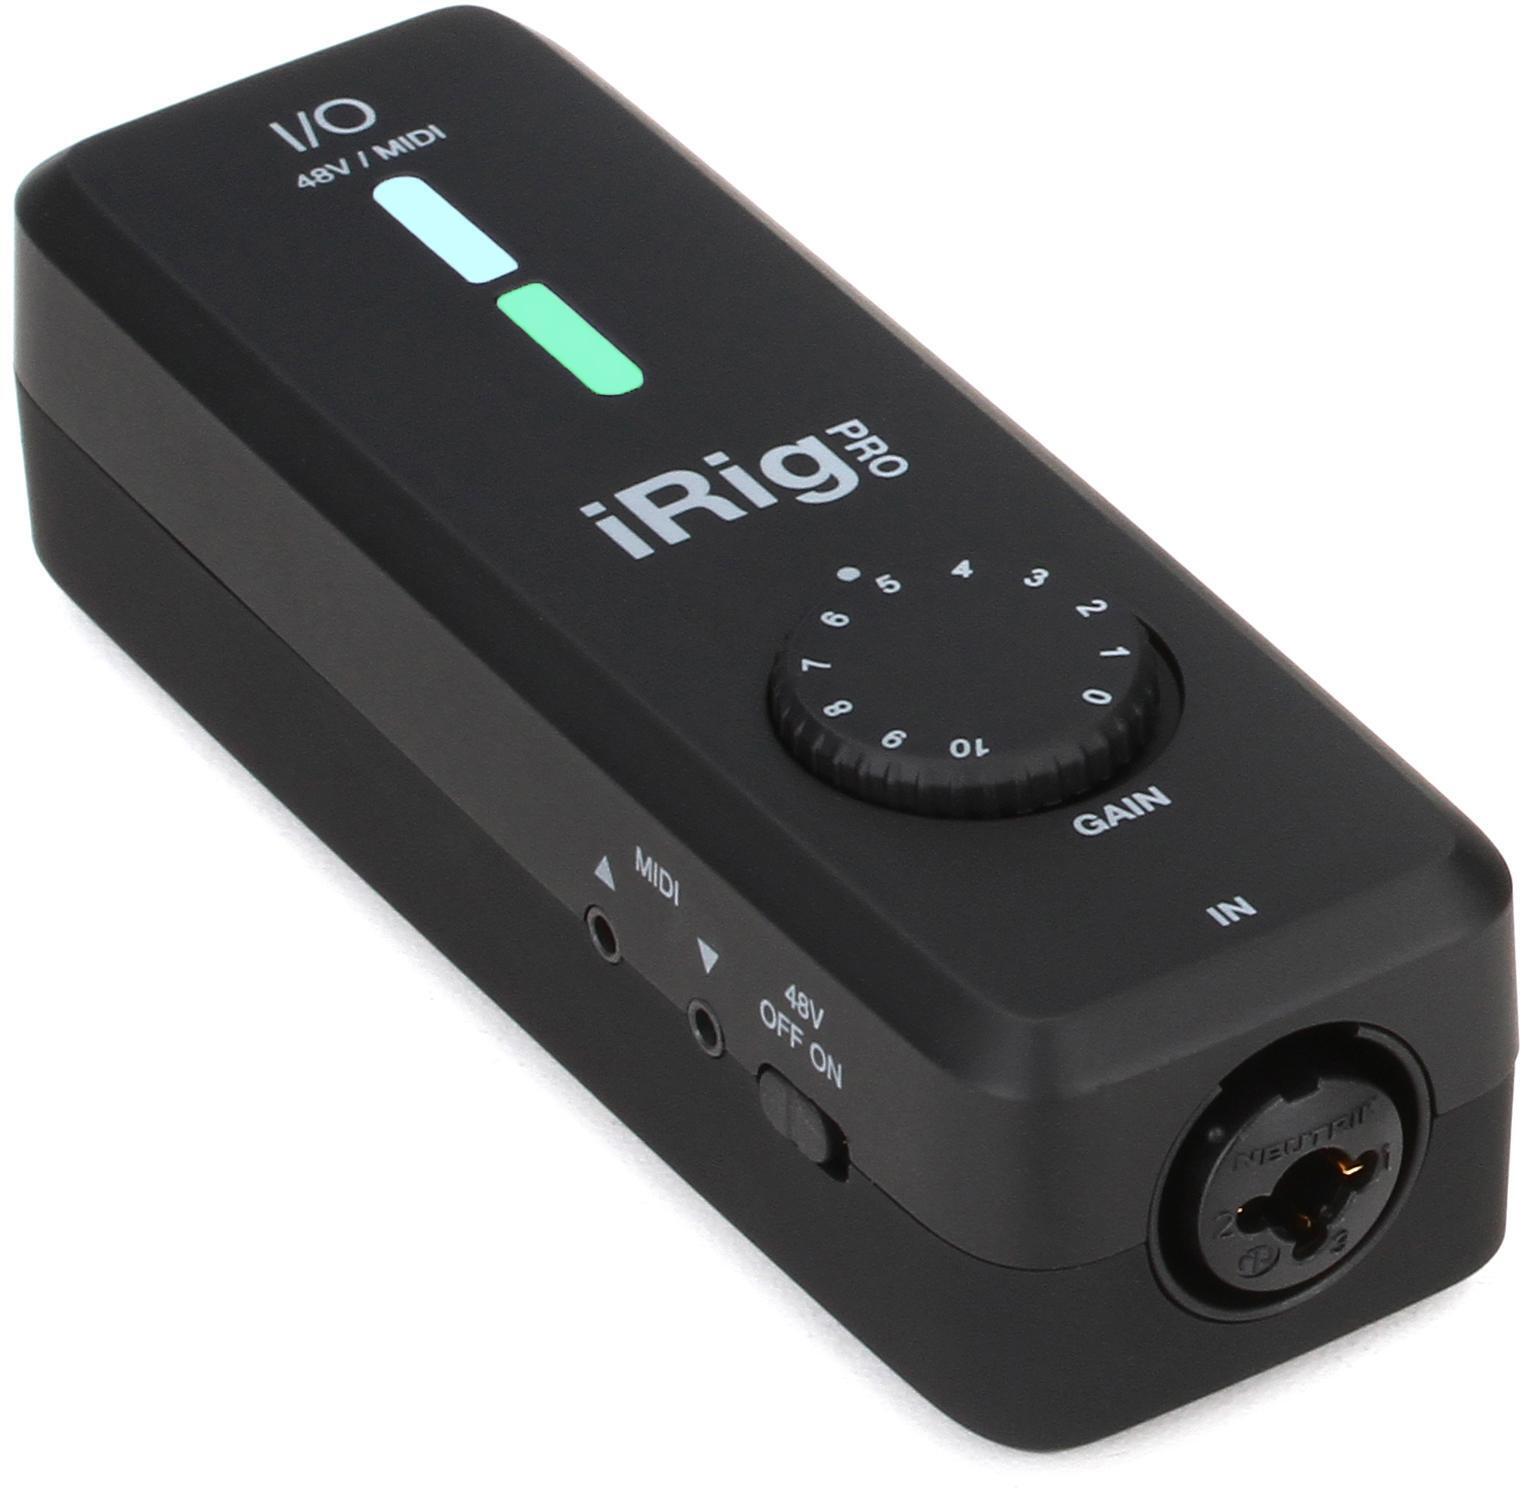 Bundled Item: IK Multimedia iRig Pro I/O USB Audio Interface for iOS, Android, Mac, and PC